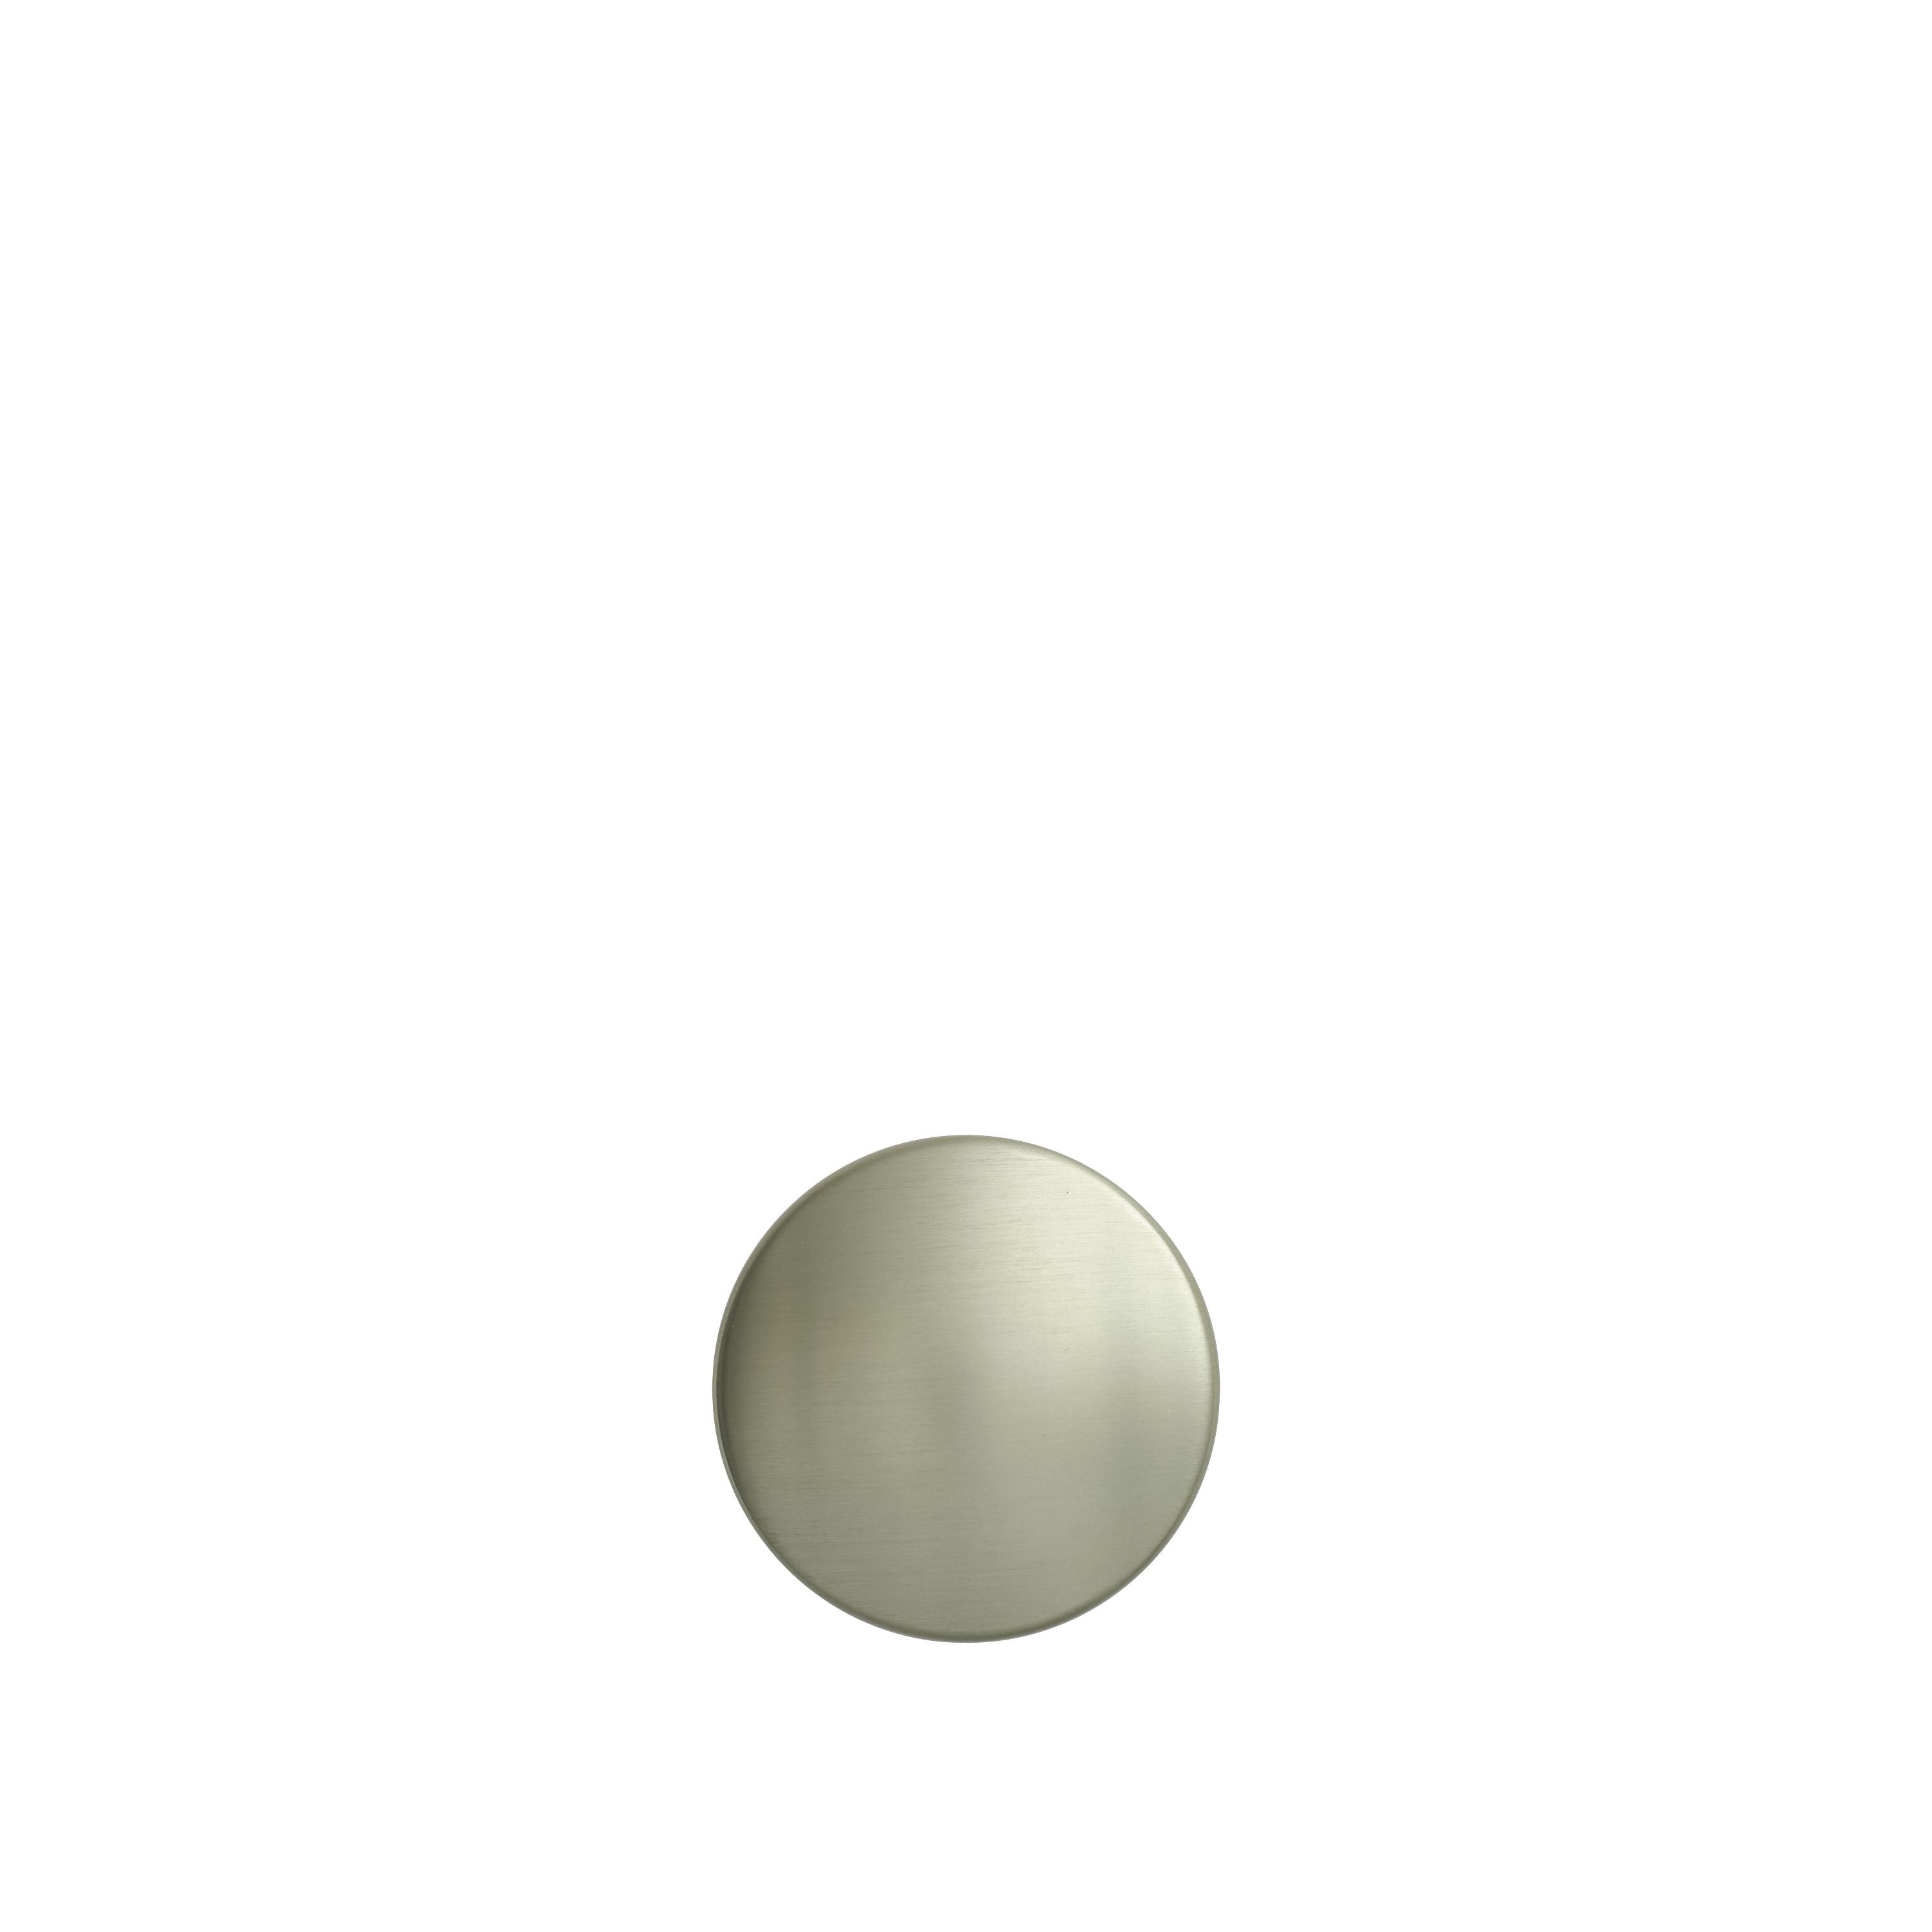 Muuto punti in metallo verde chiaro, Ø 5 cm